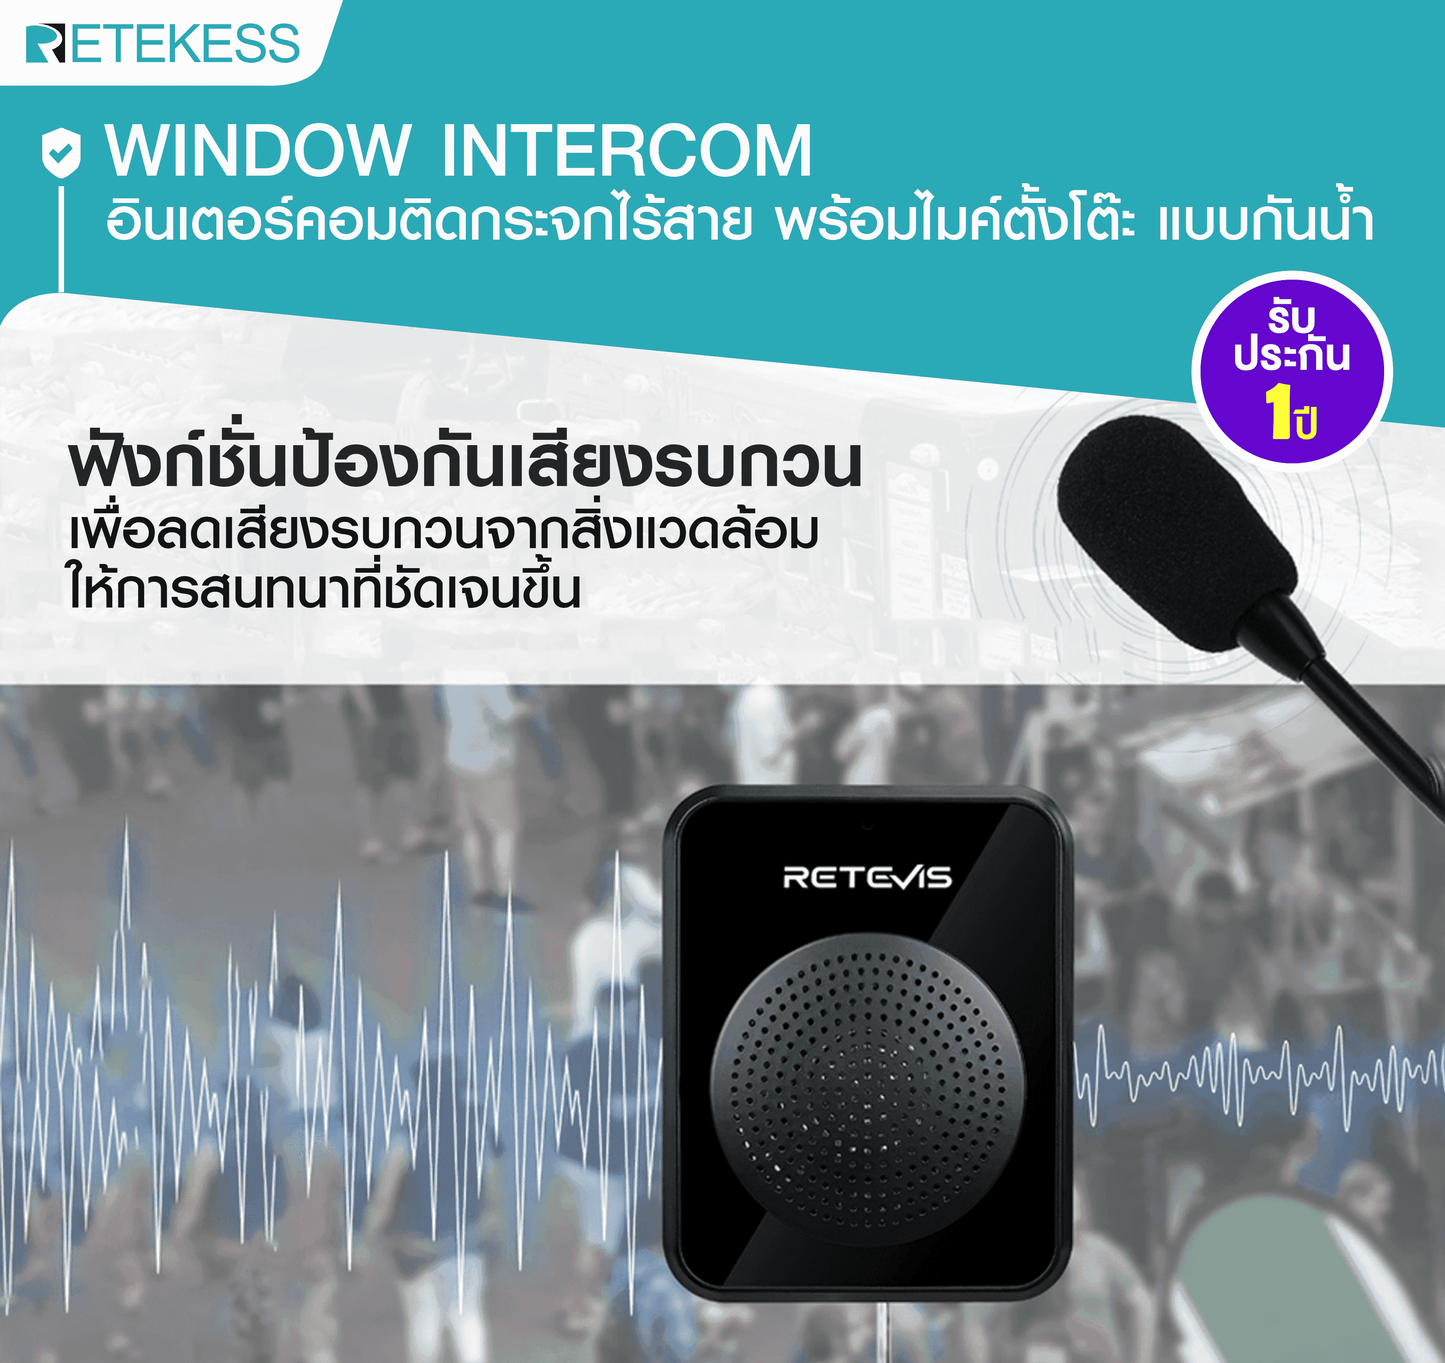 Window Intercom RT9909 อินเตอร์คอมติดกระจกไร้สาย พร้อมไมค์ตั้งโต๊ะ แบบกันน้ำ เสียงดัง ฟังชัดแม้อยู่ในที่ที่มีเสียงรบกวน ลำโพงคุณภาพสูง เสียบปลั๊กใช้งานได้ทันที